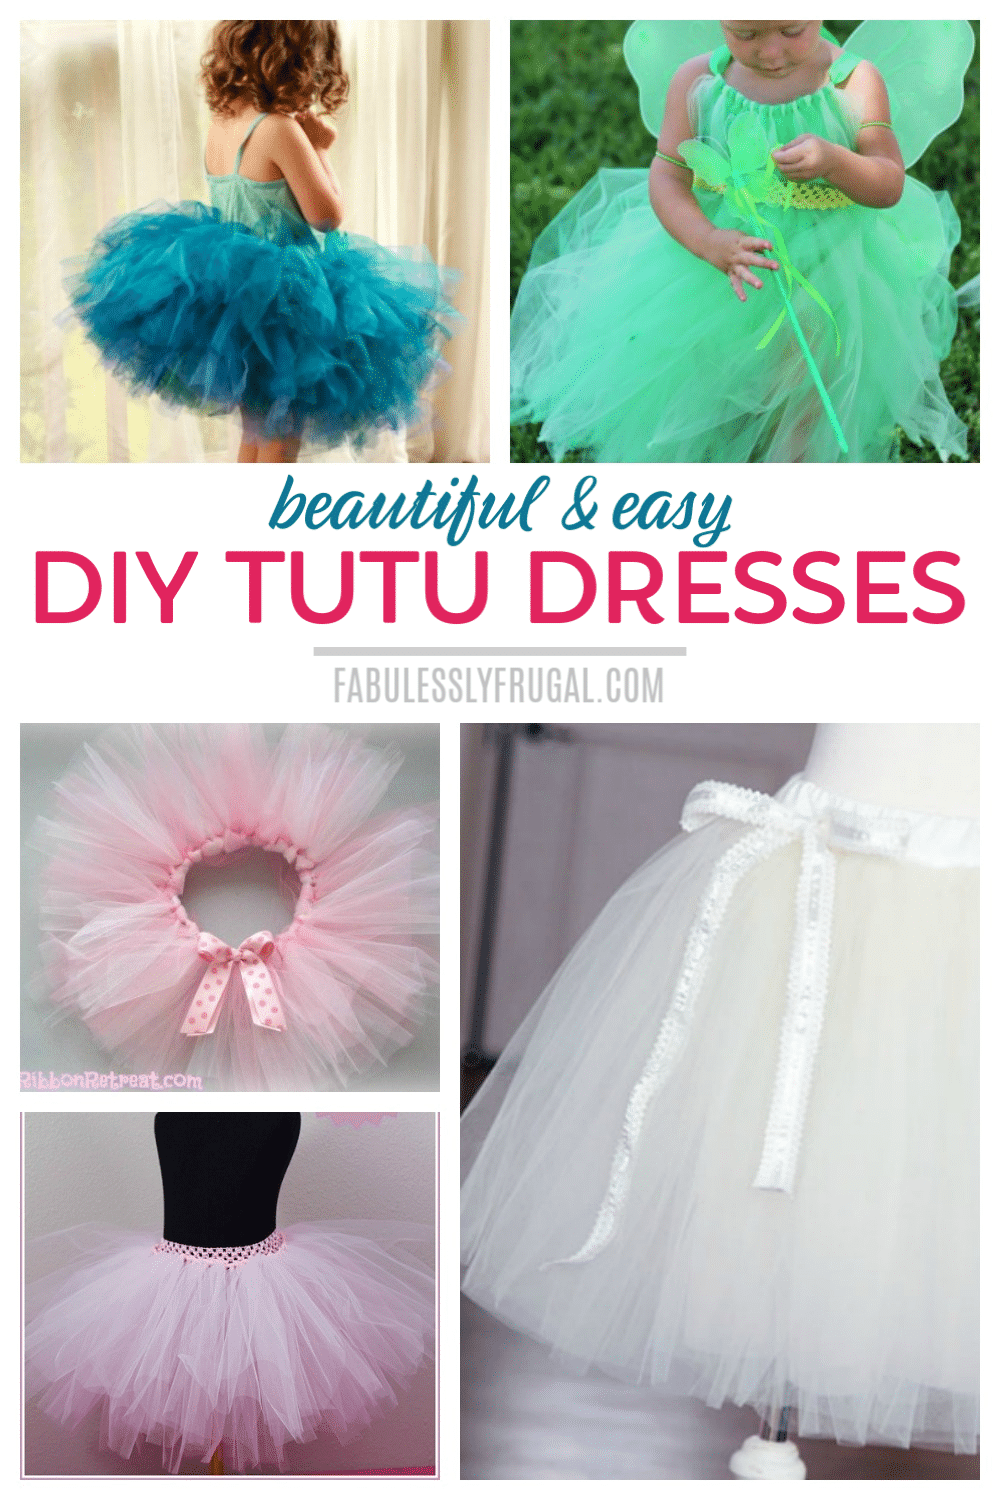 Tutu dress tutorial and ideas for little girls